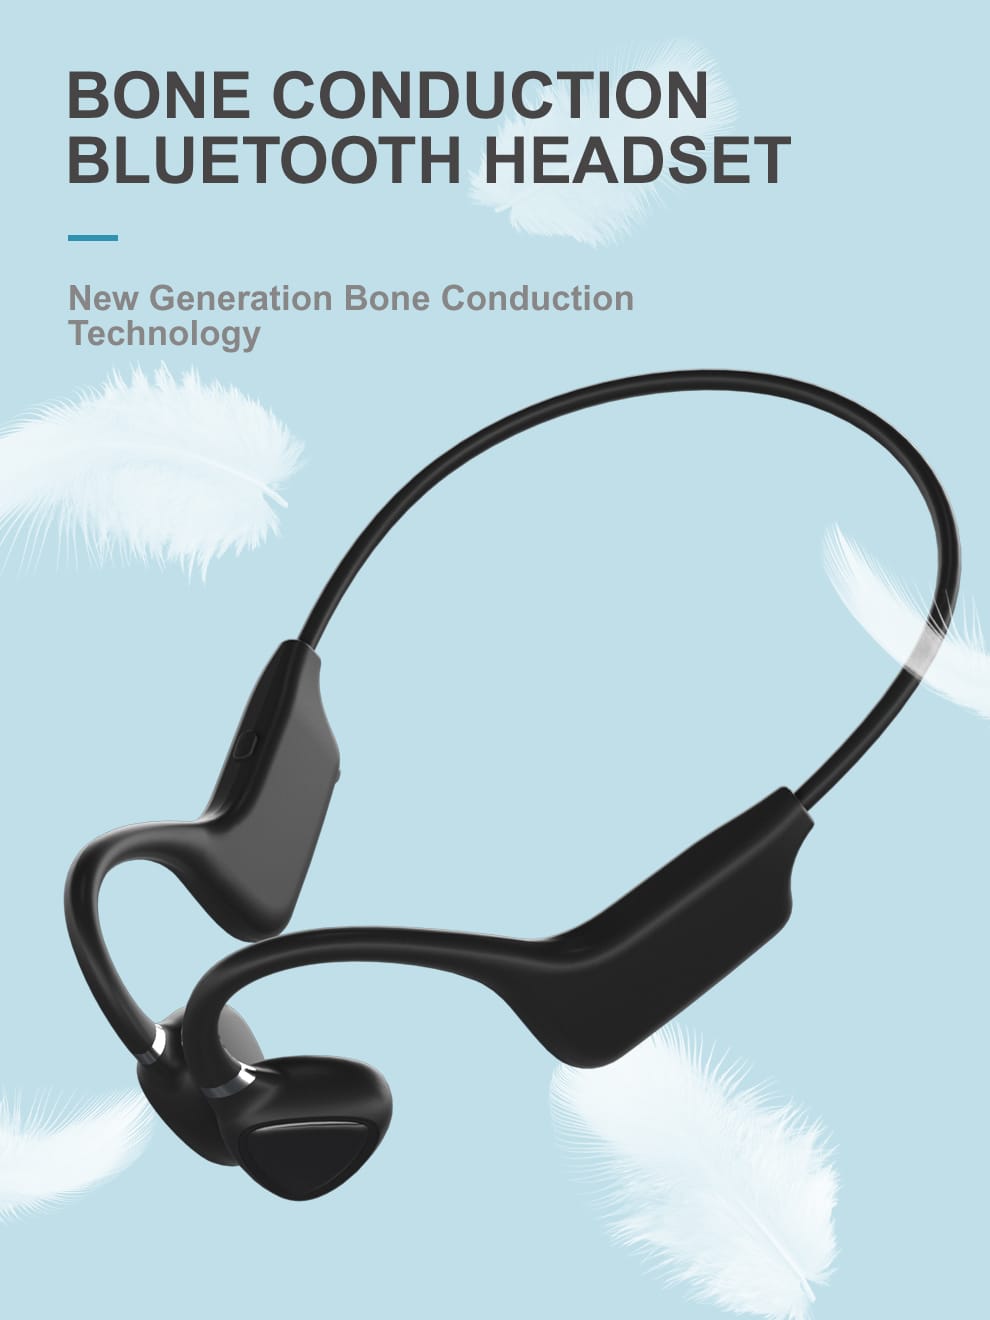 ePP-BC18 Military grade Intelligent Bone Conduction Smart Bluetooth Headphone Technology, Latest audio technology for smart Headphones Sold 32,000+ worldwide